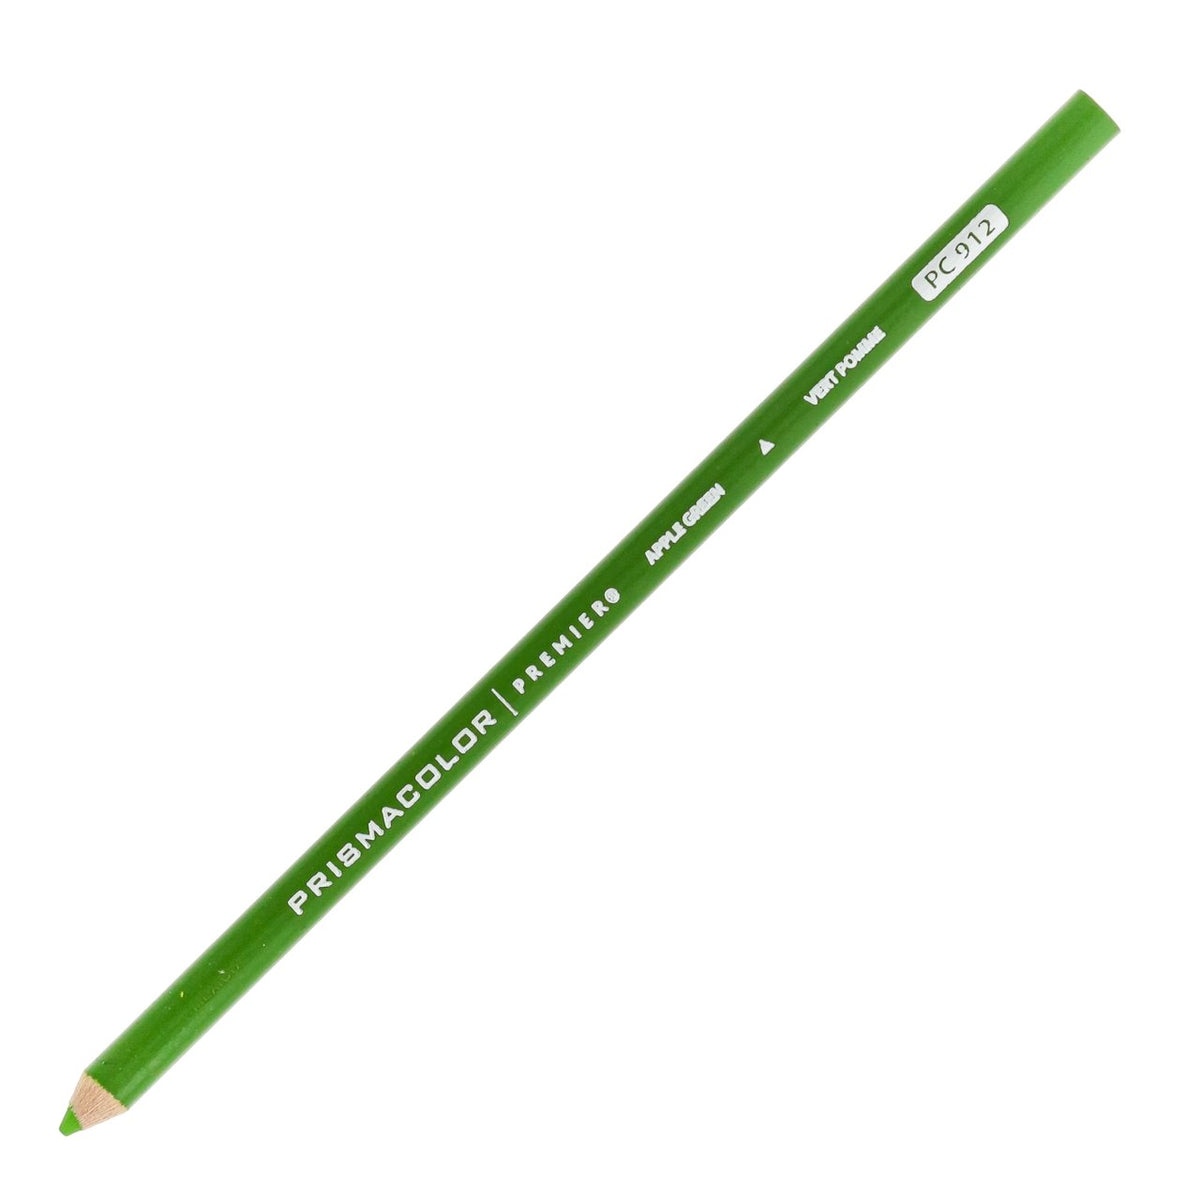 Prismacolor Premier Colored Pencils Art Supplies for Drawing